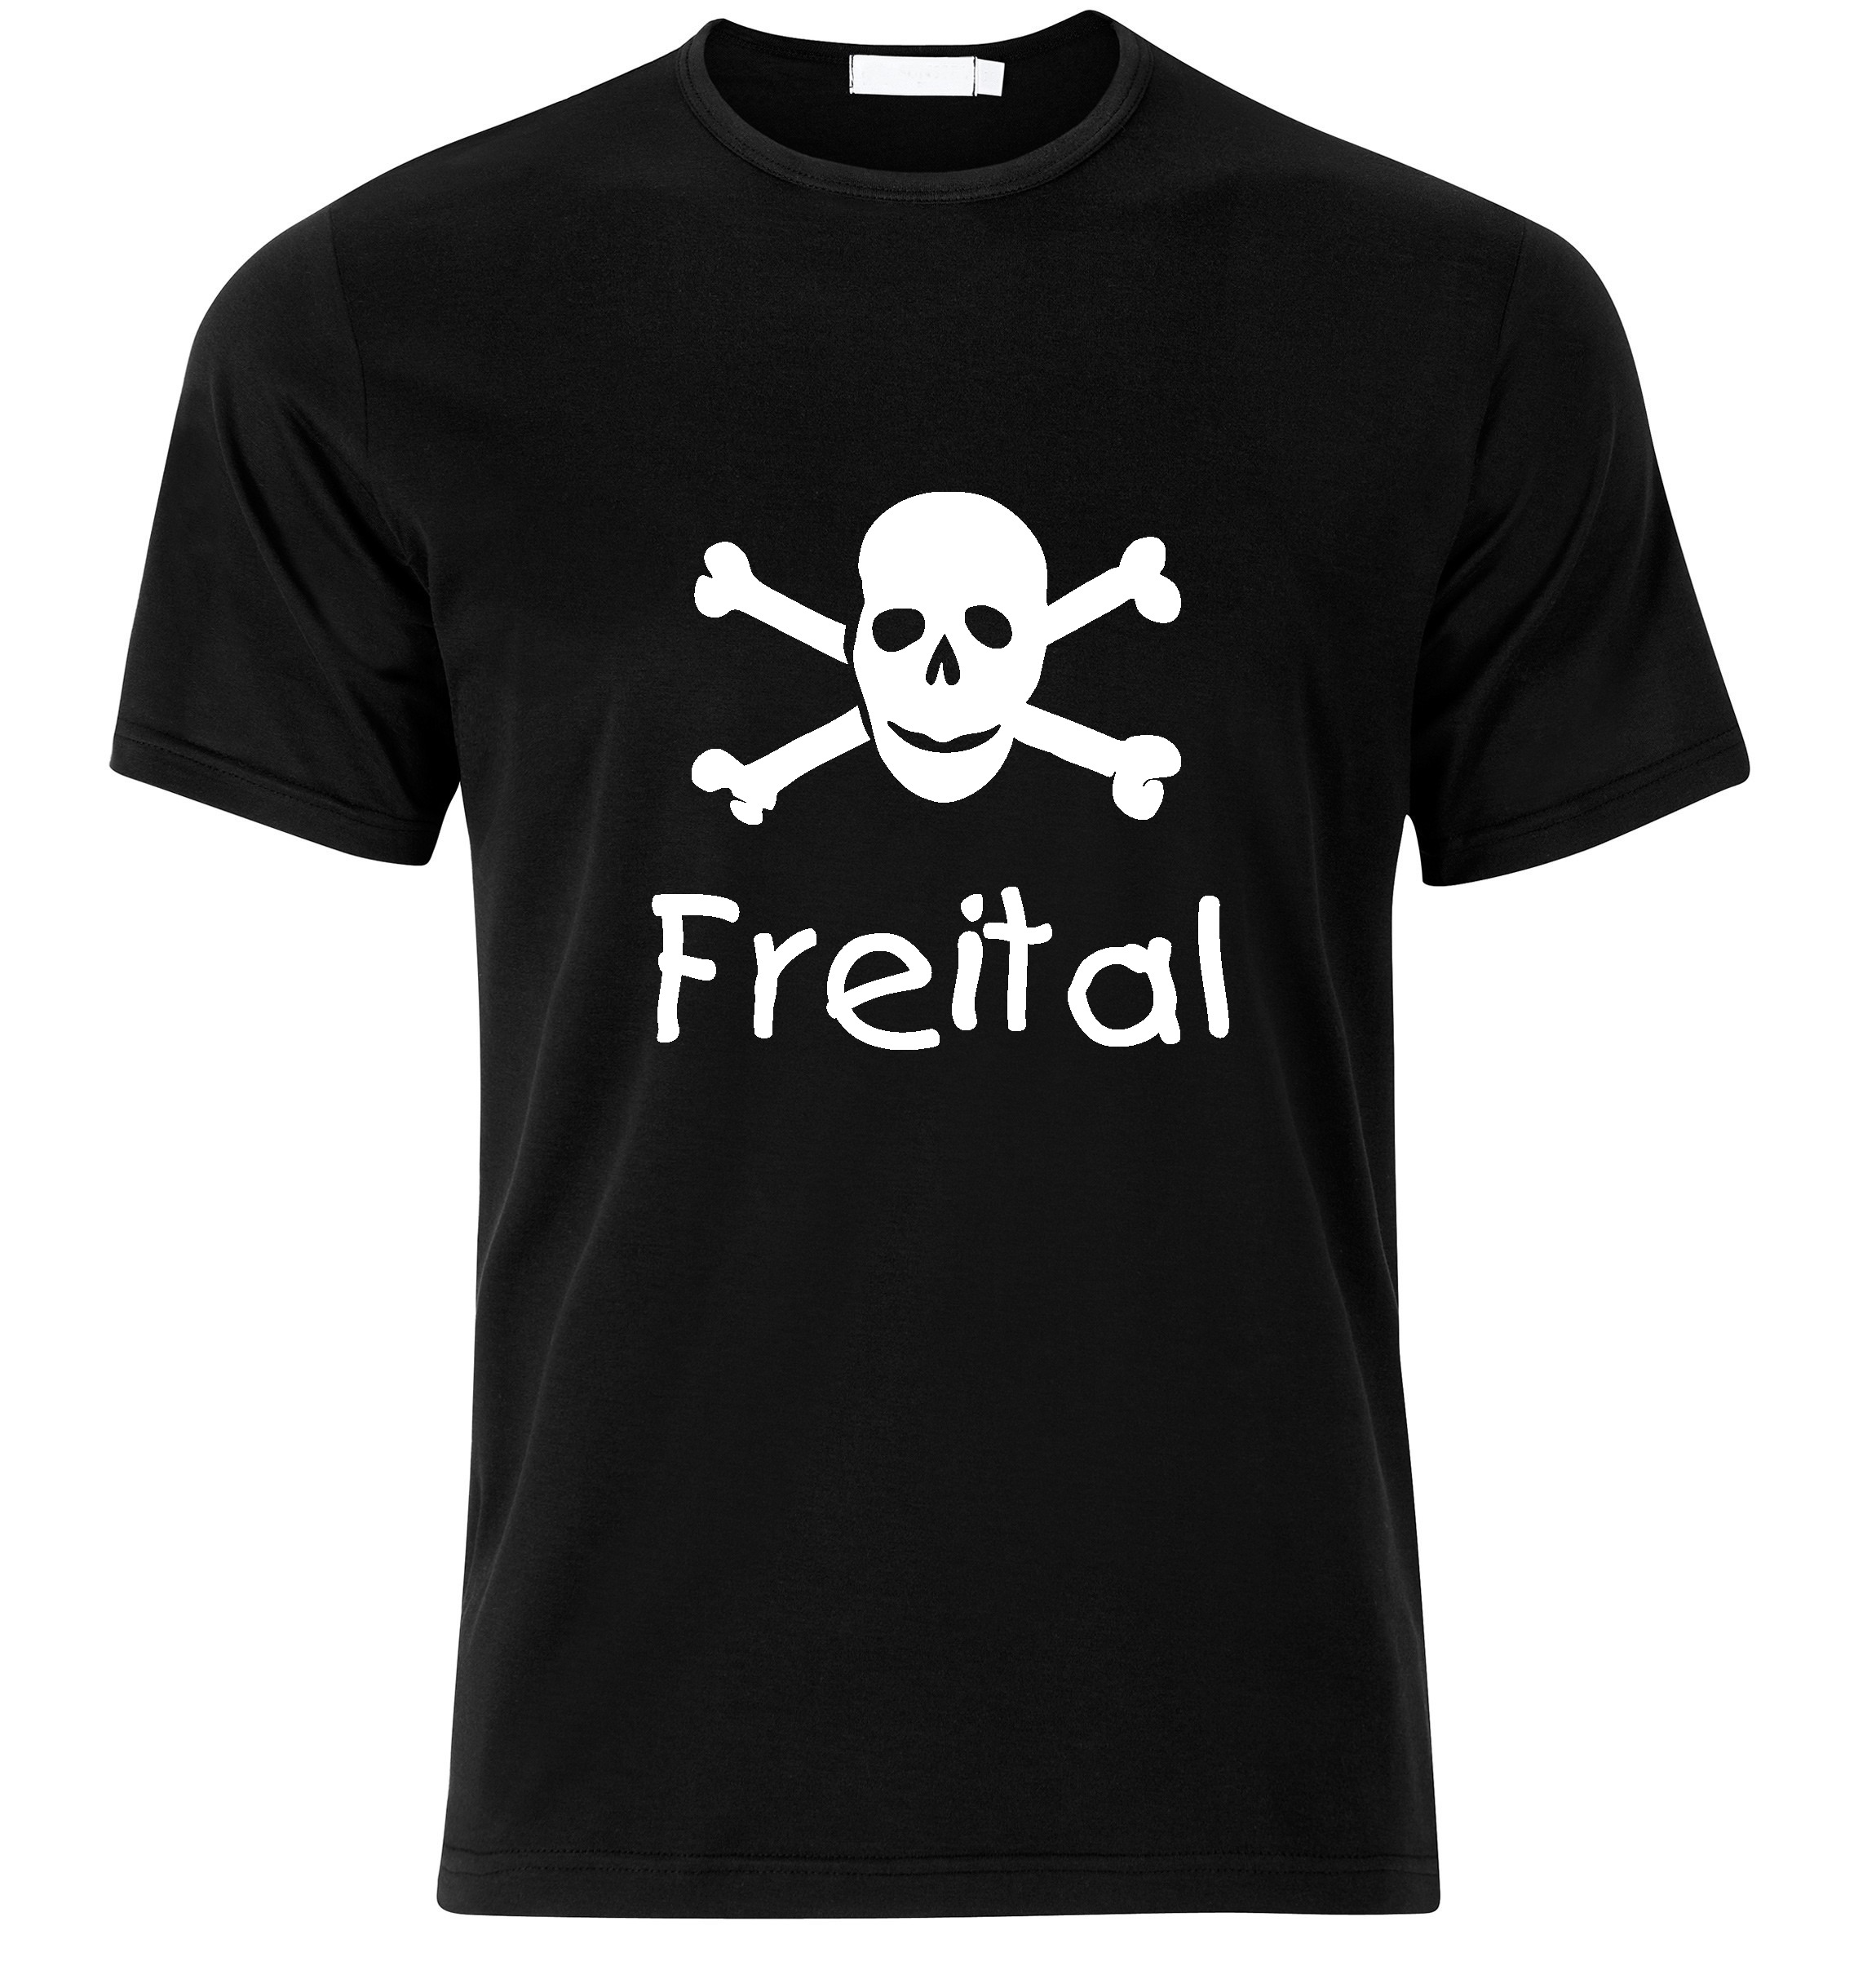 T-Shirt Freital Jolly Roger, Totenkopf